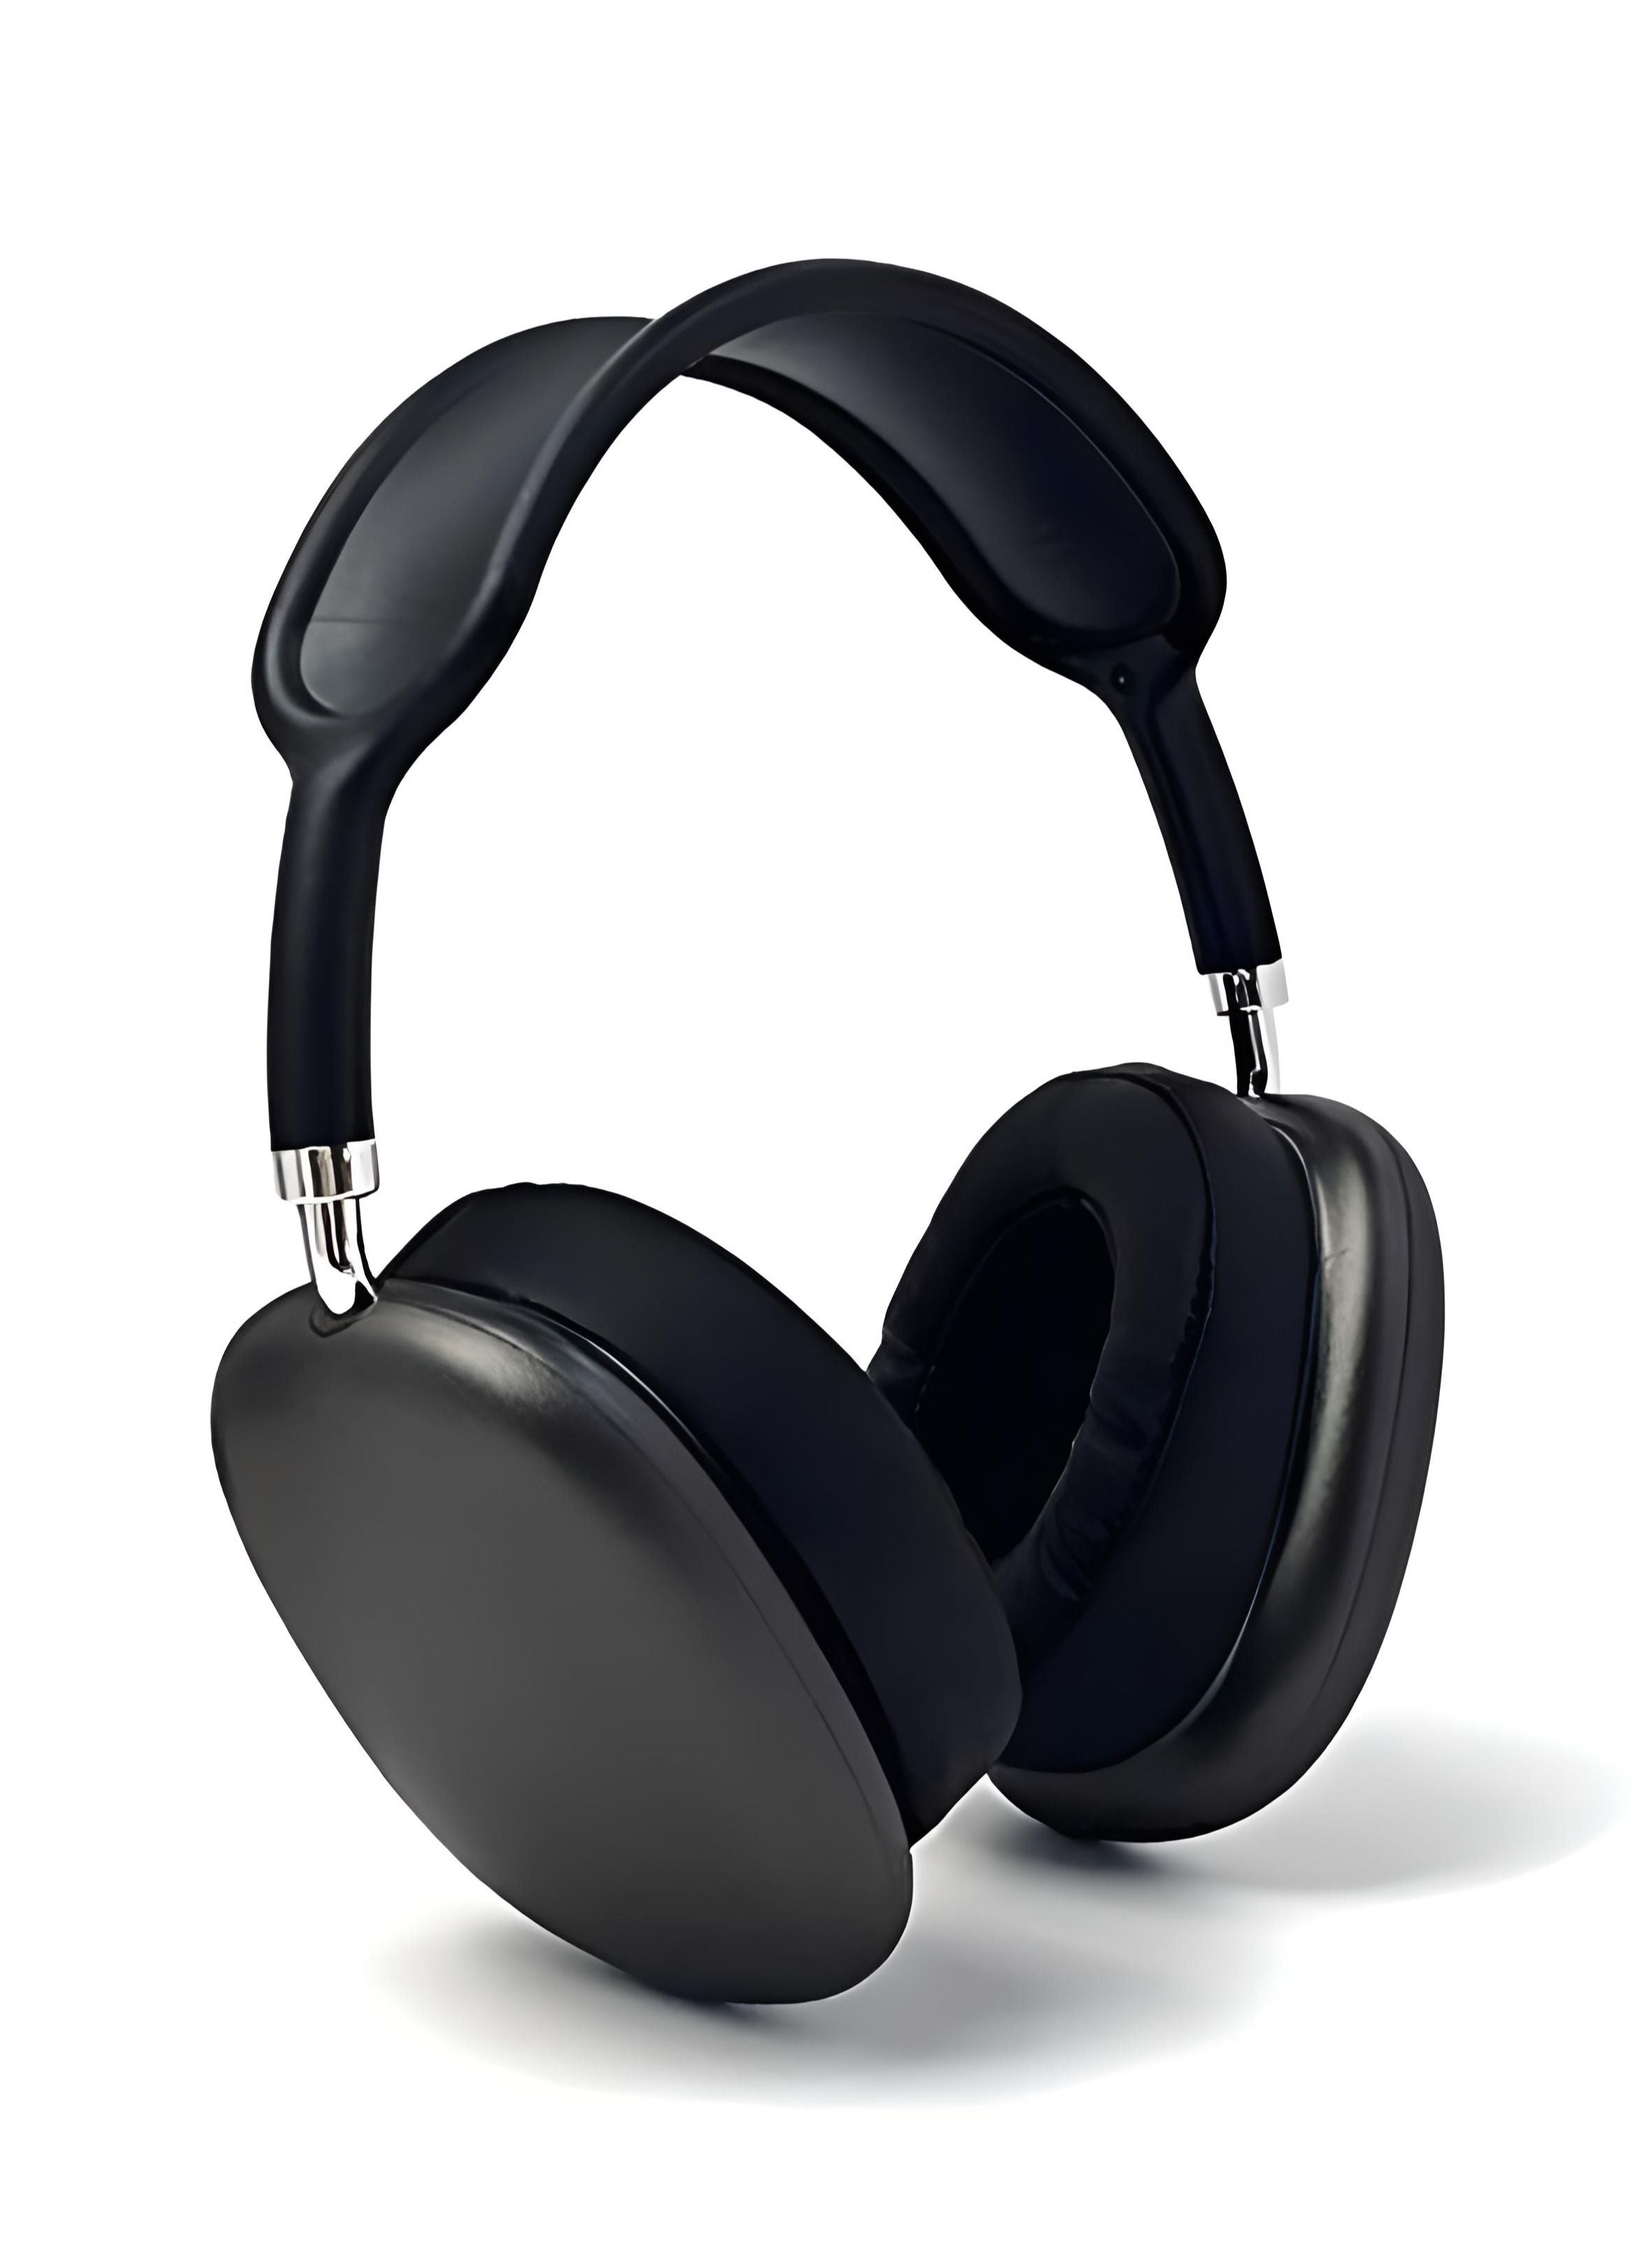 P9 bluetooth headphone black color